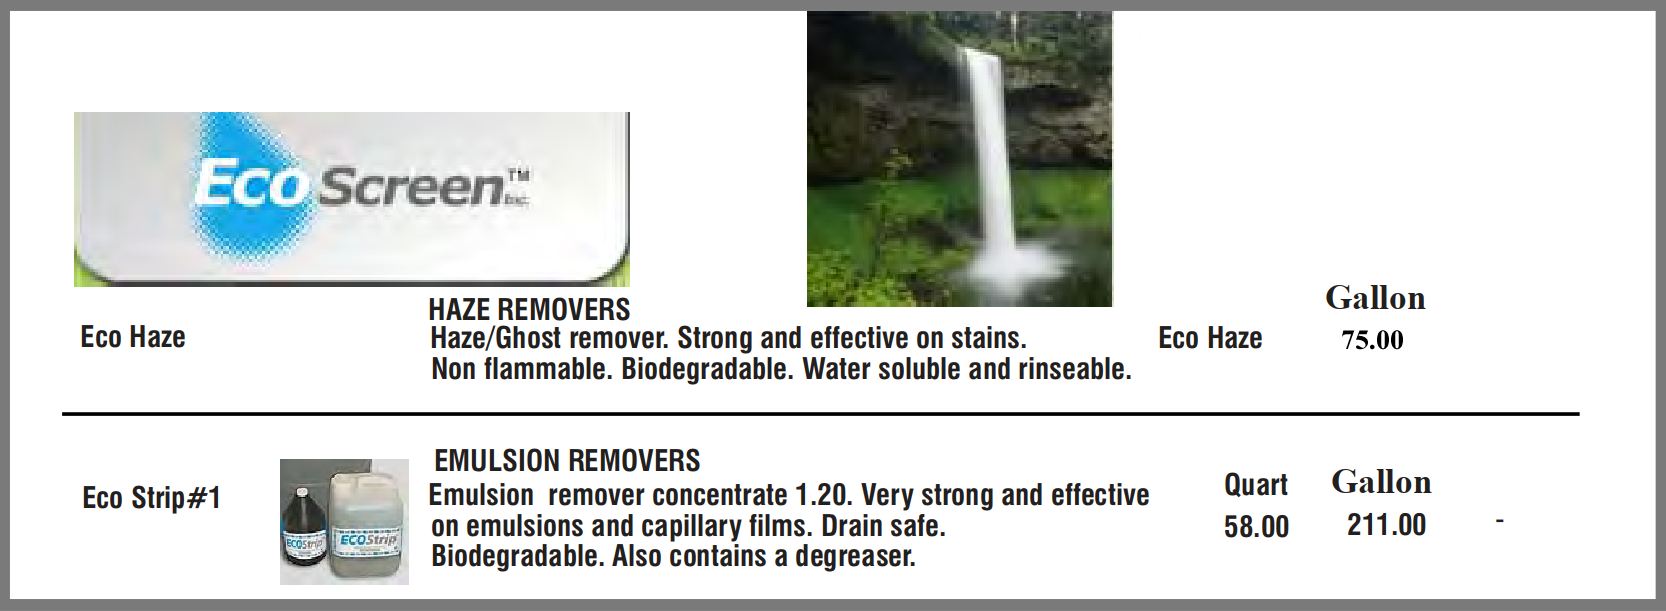 emulsion remover 3 2 - Screen Emulsion and Stencil Removers